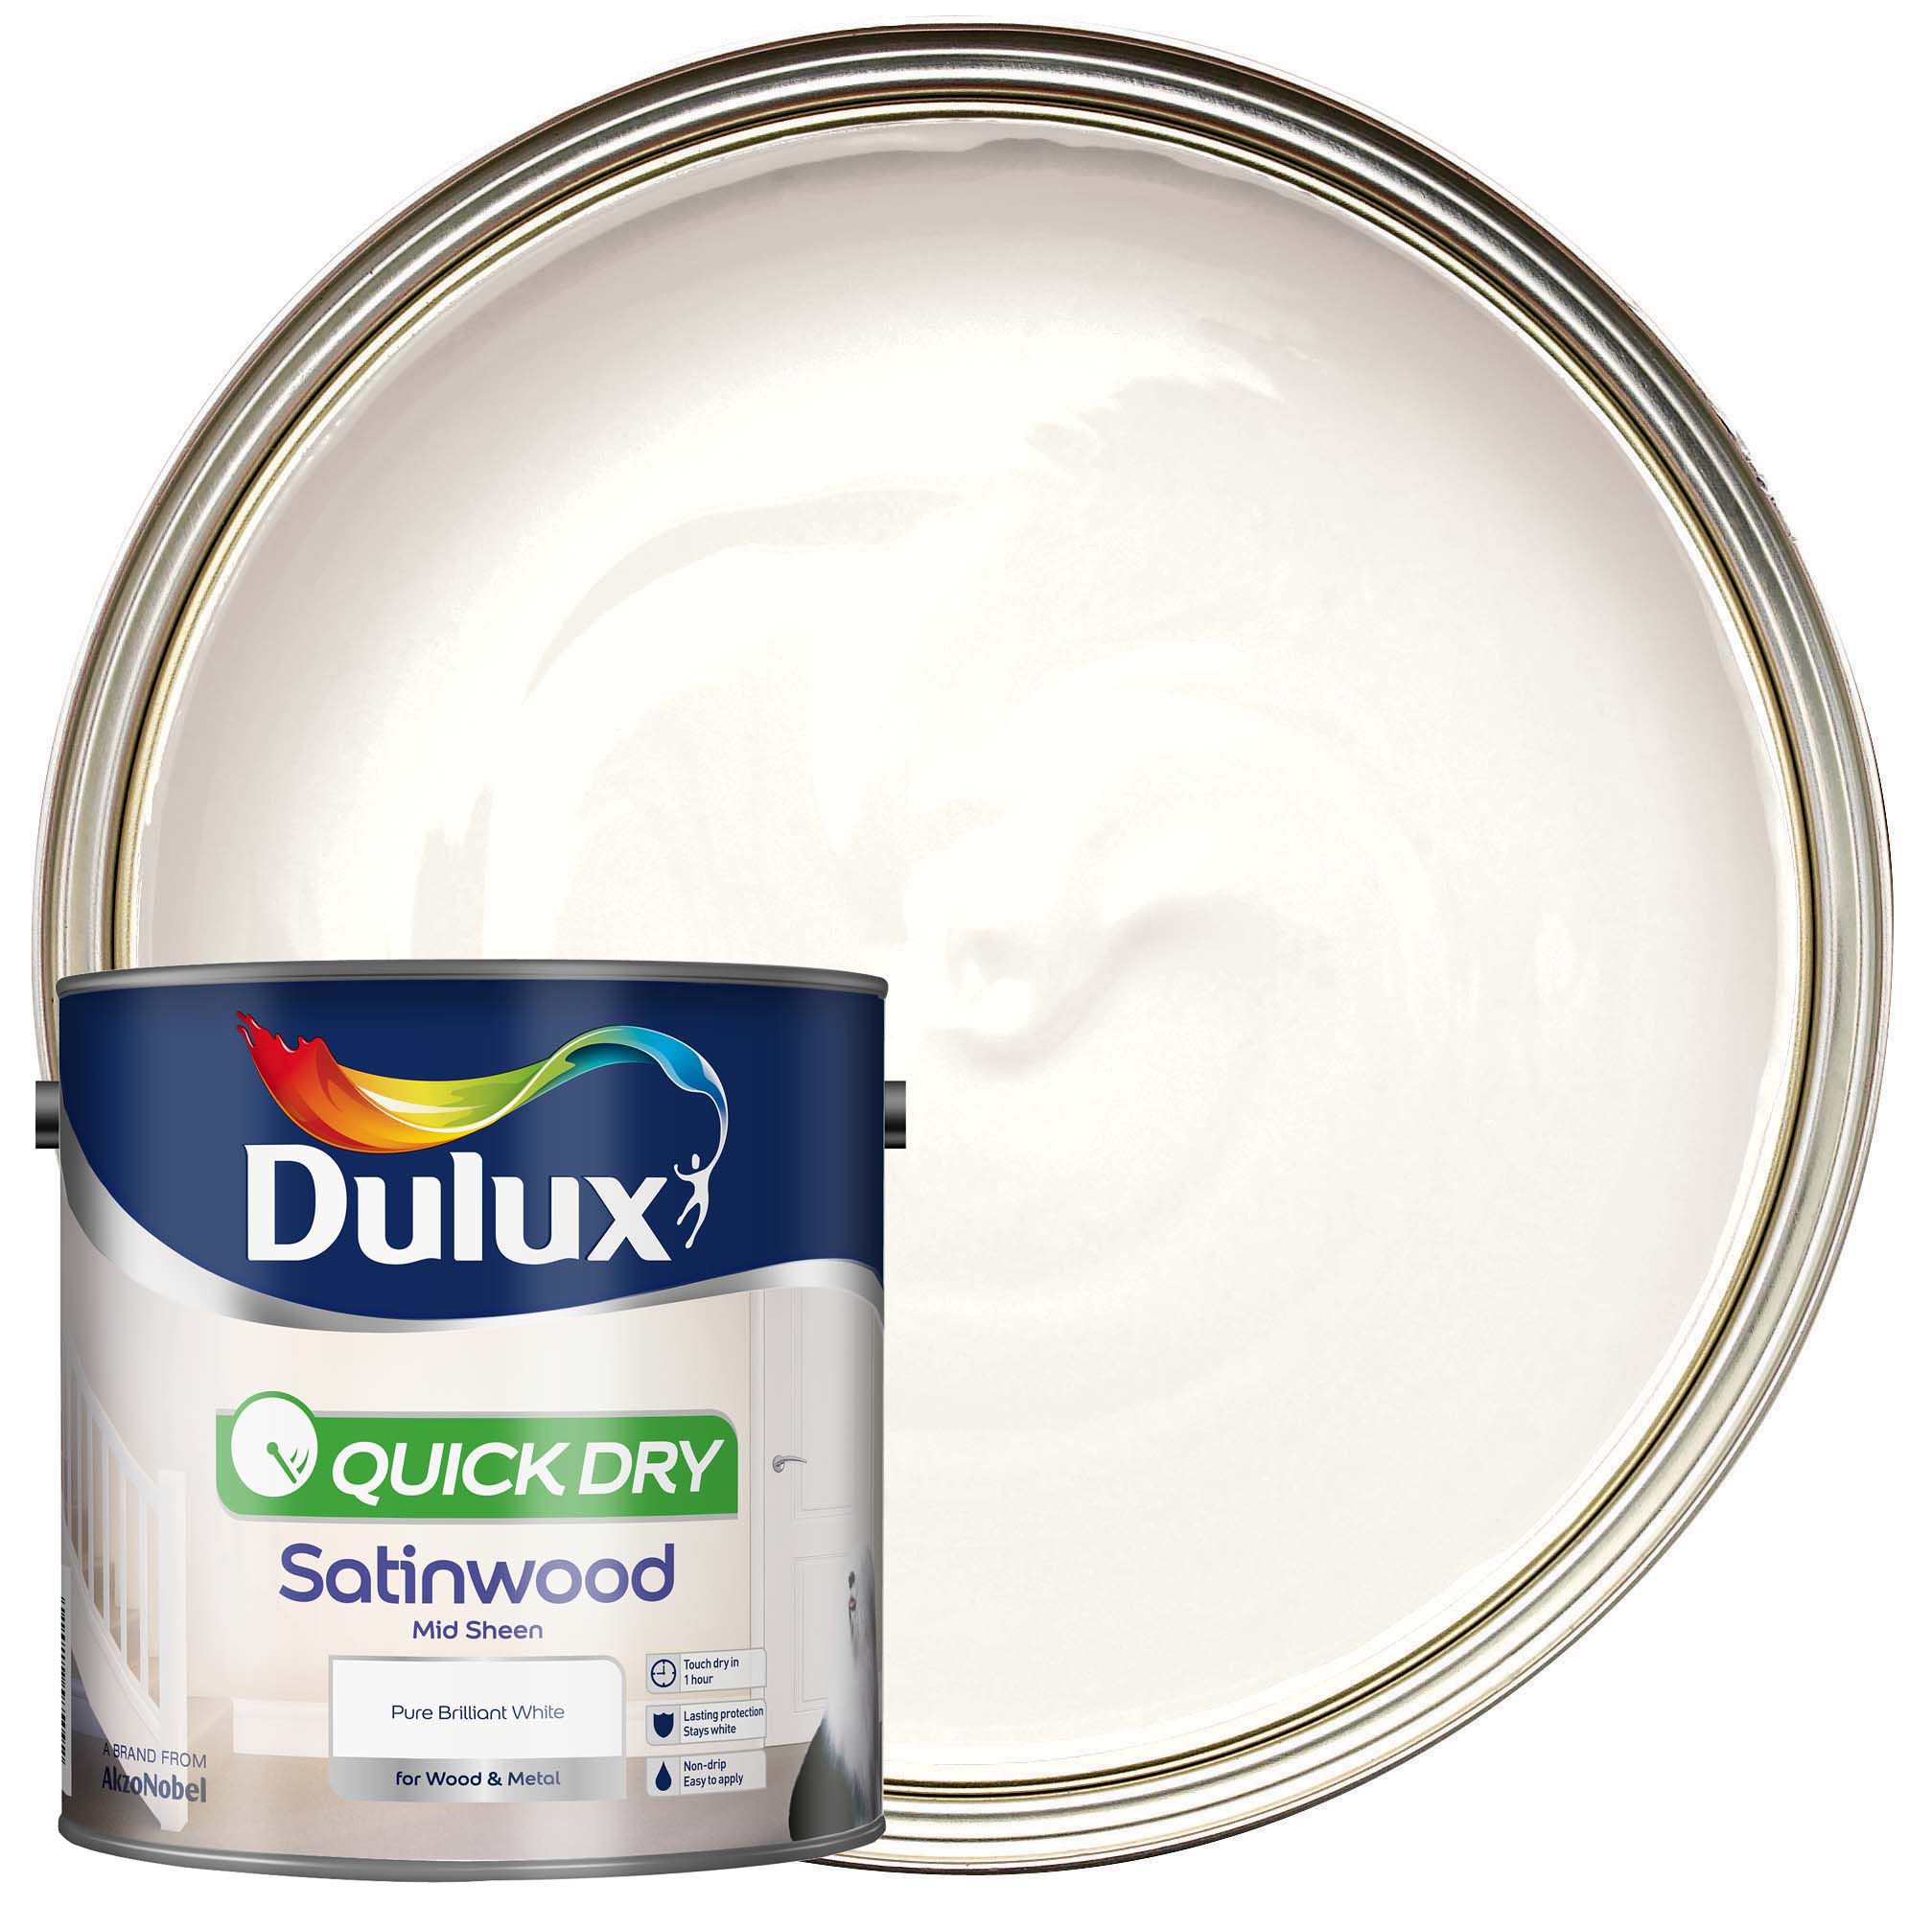 Image of Dulux Quick Dry Satinwood Paint - Pure Brilliant White - 2.5L